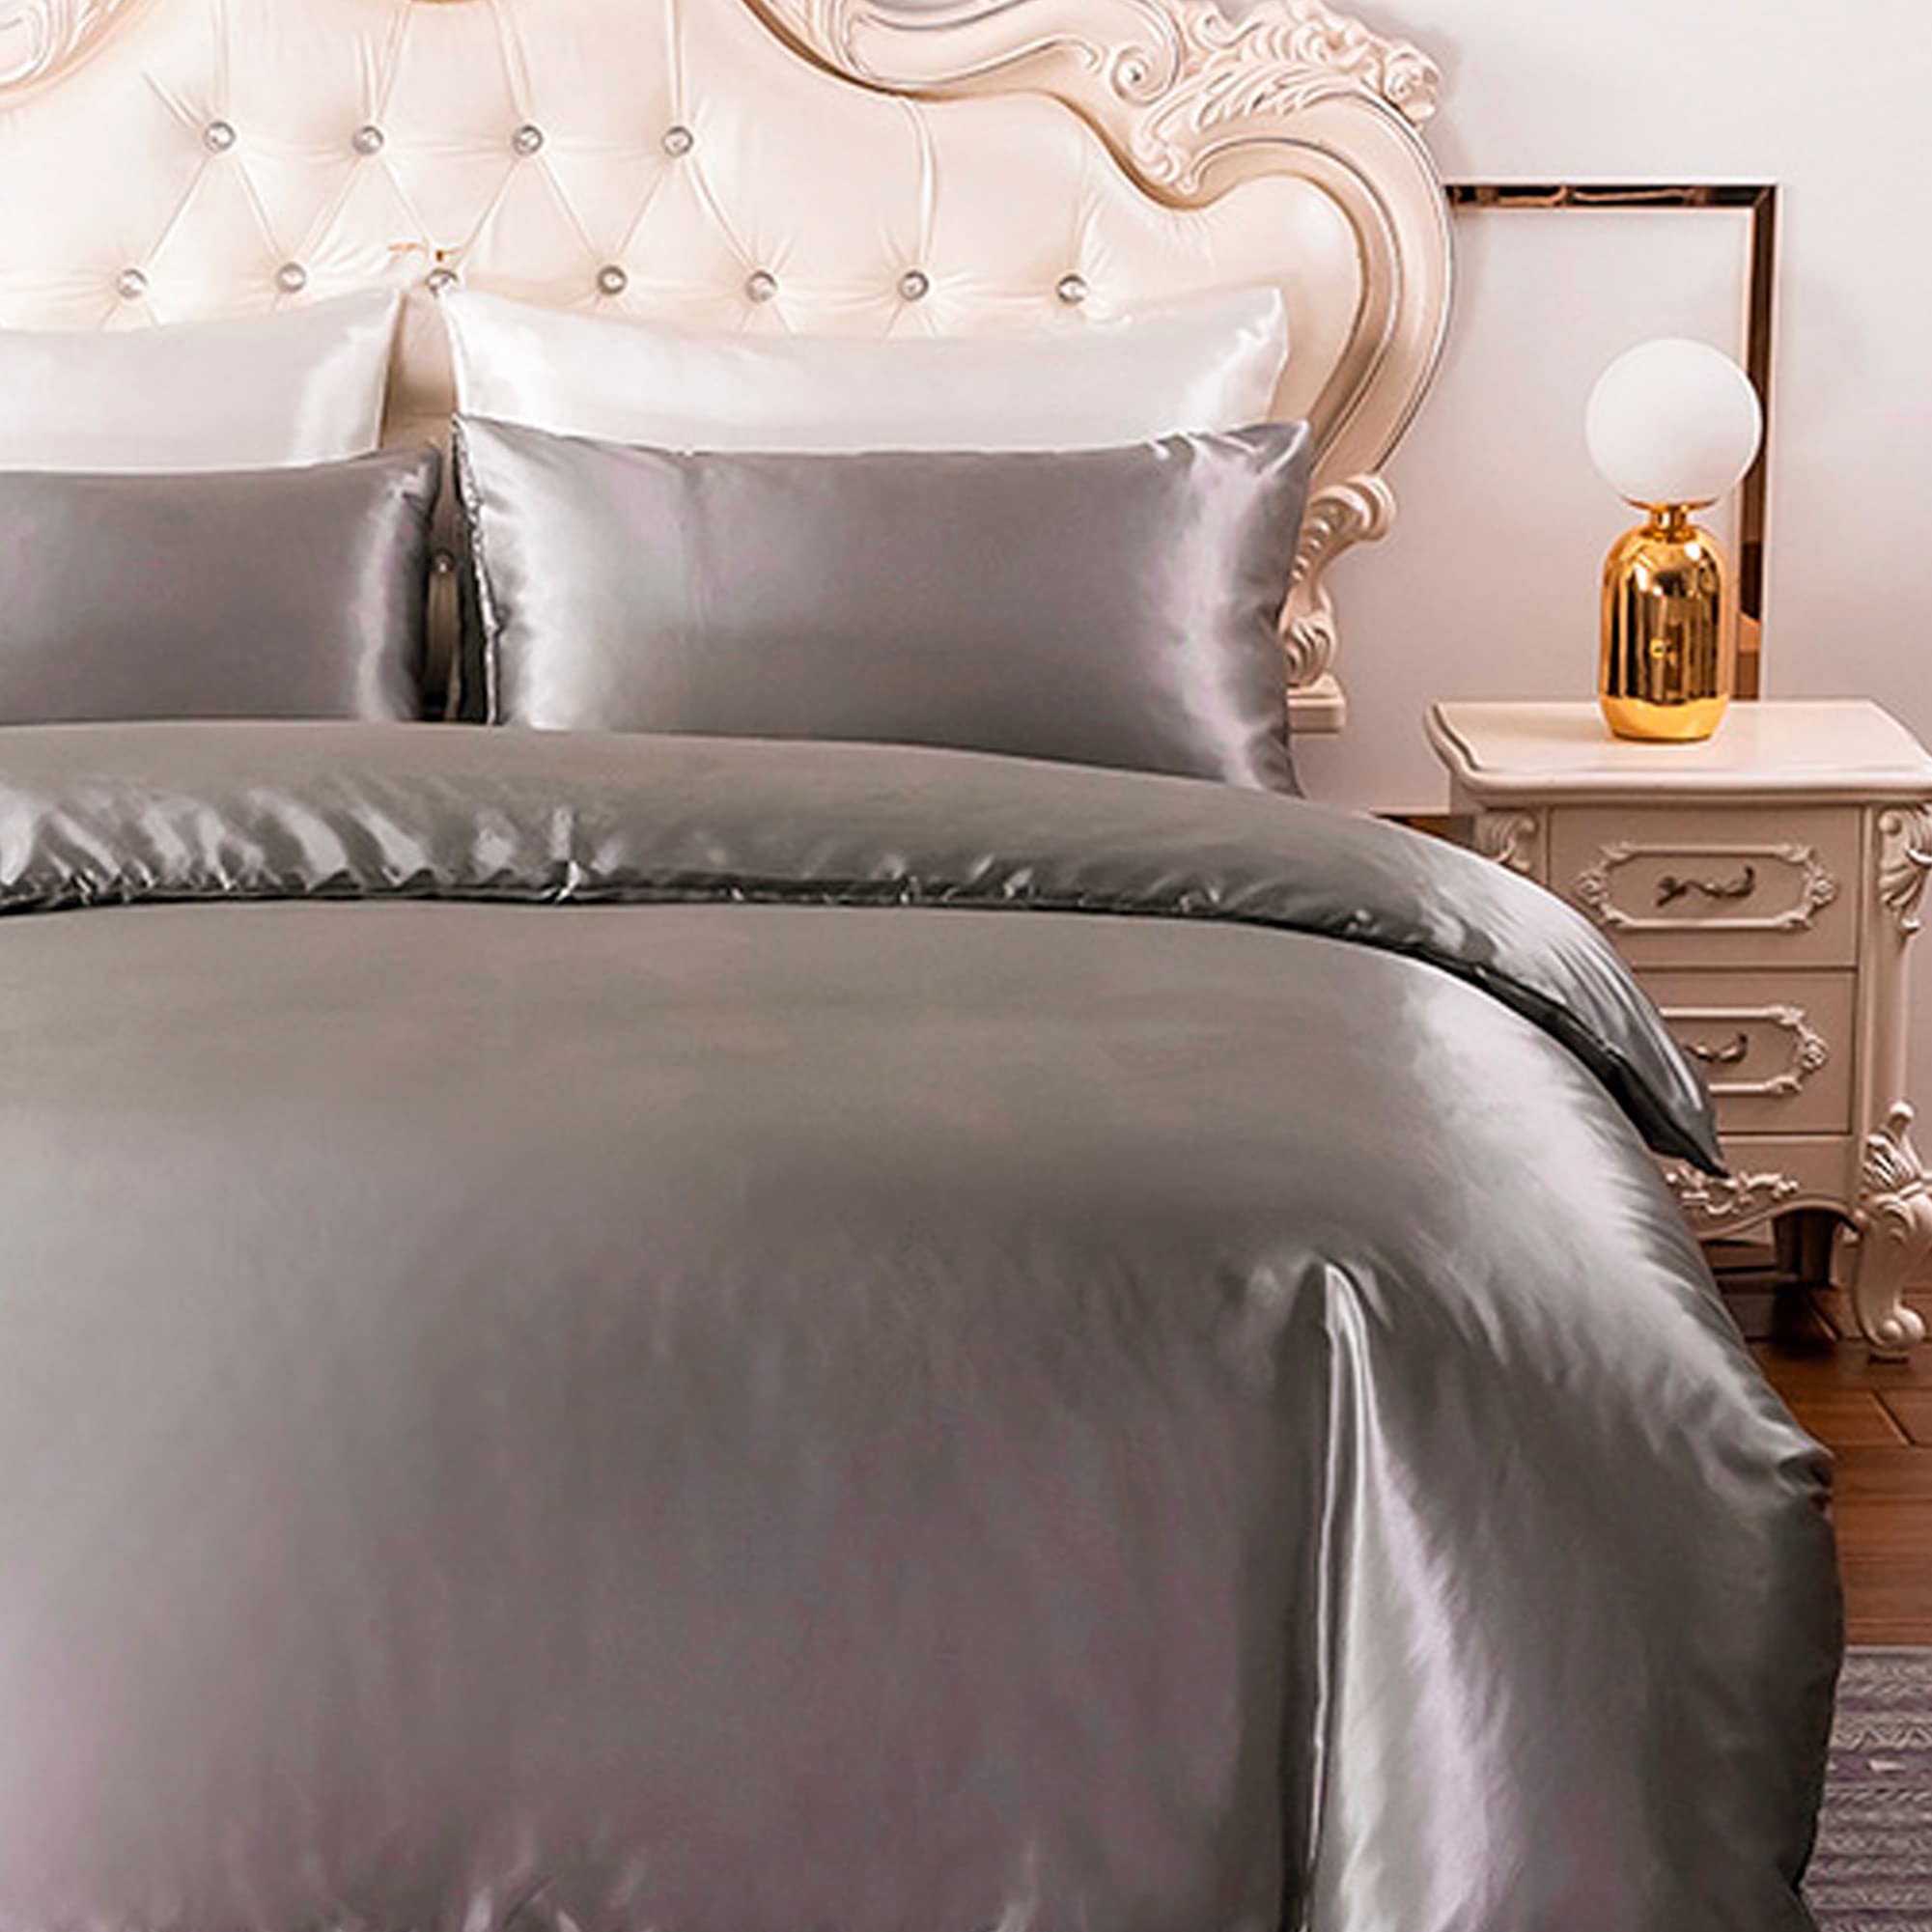 HYSENM Satin Bettwäsche 200 x 200 cm Seide Luxus Bettbezug Set Microfaser Bettbezug+ 2 Kissenhülle 50 x 70 cm einfarbig glatt bequem elegant, Grau